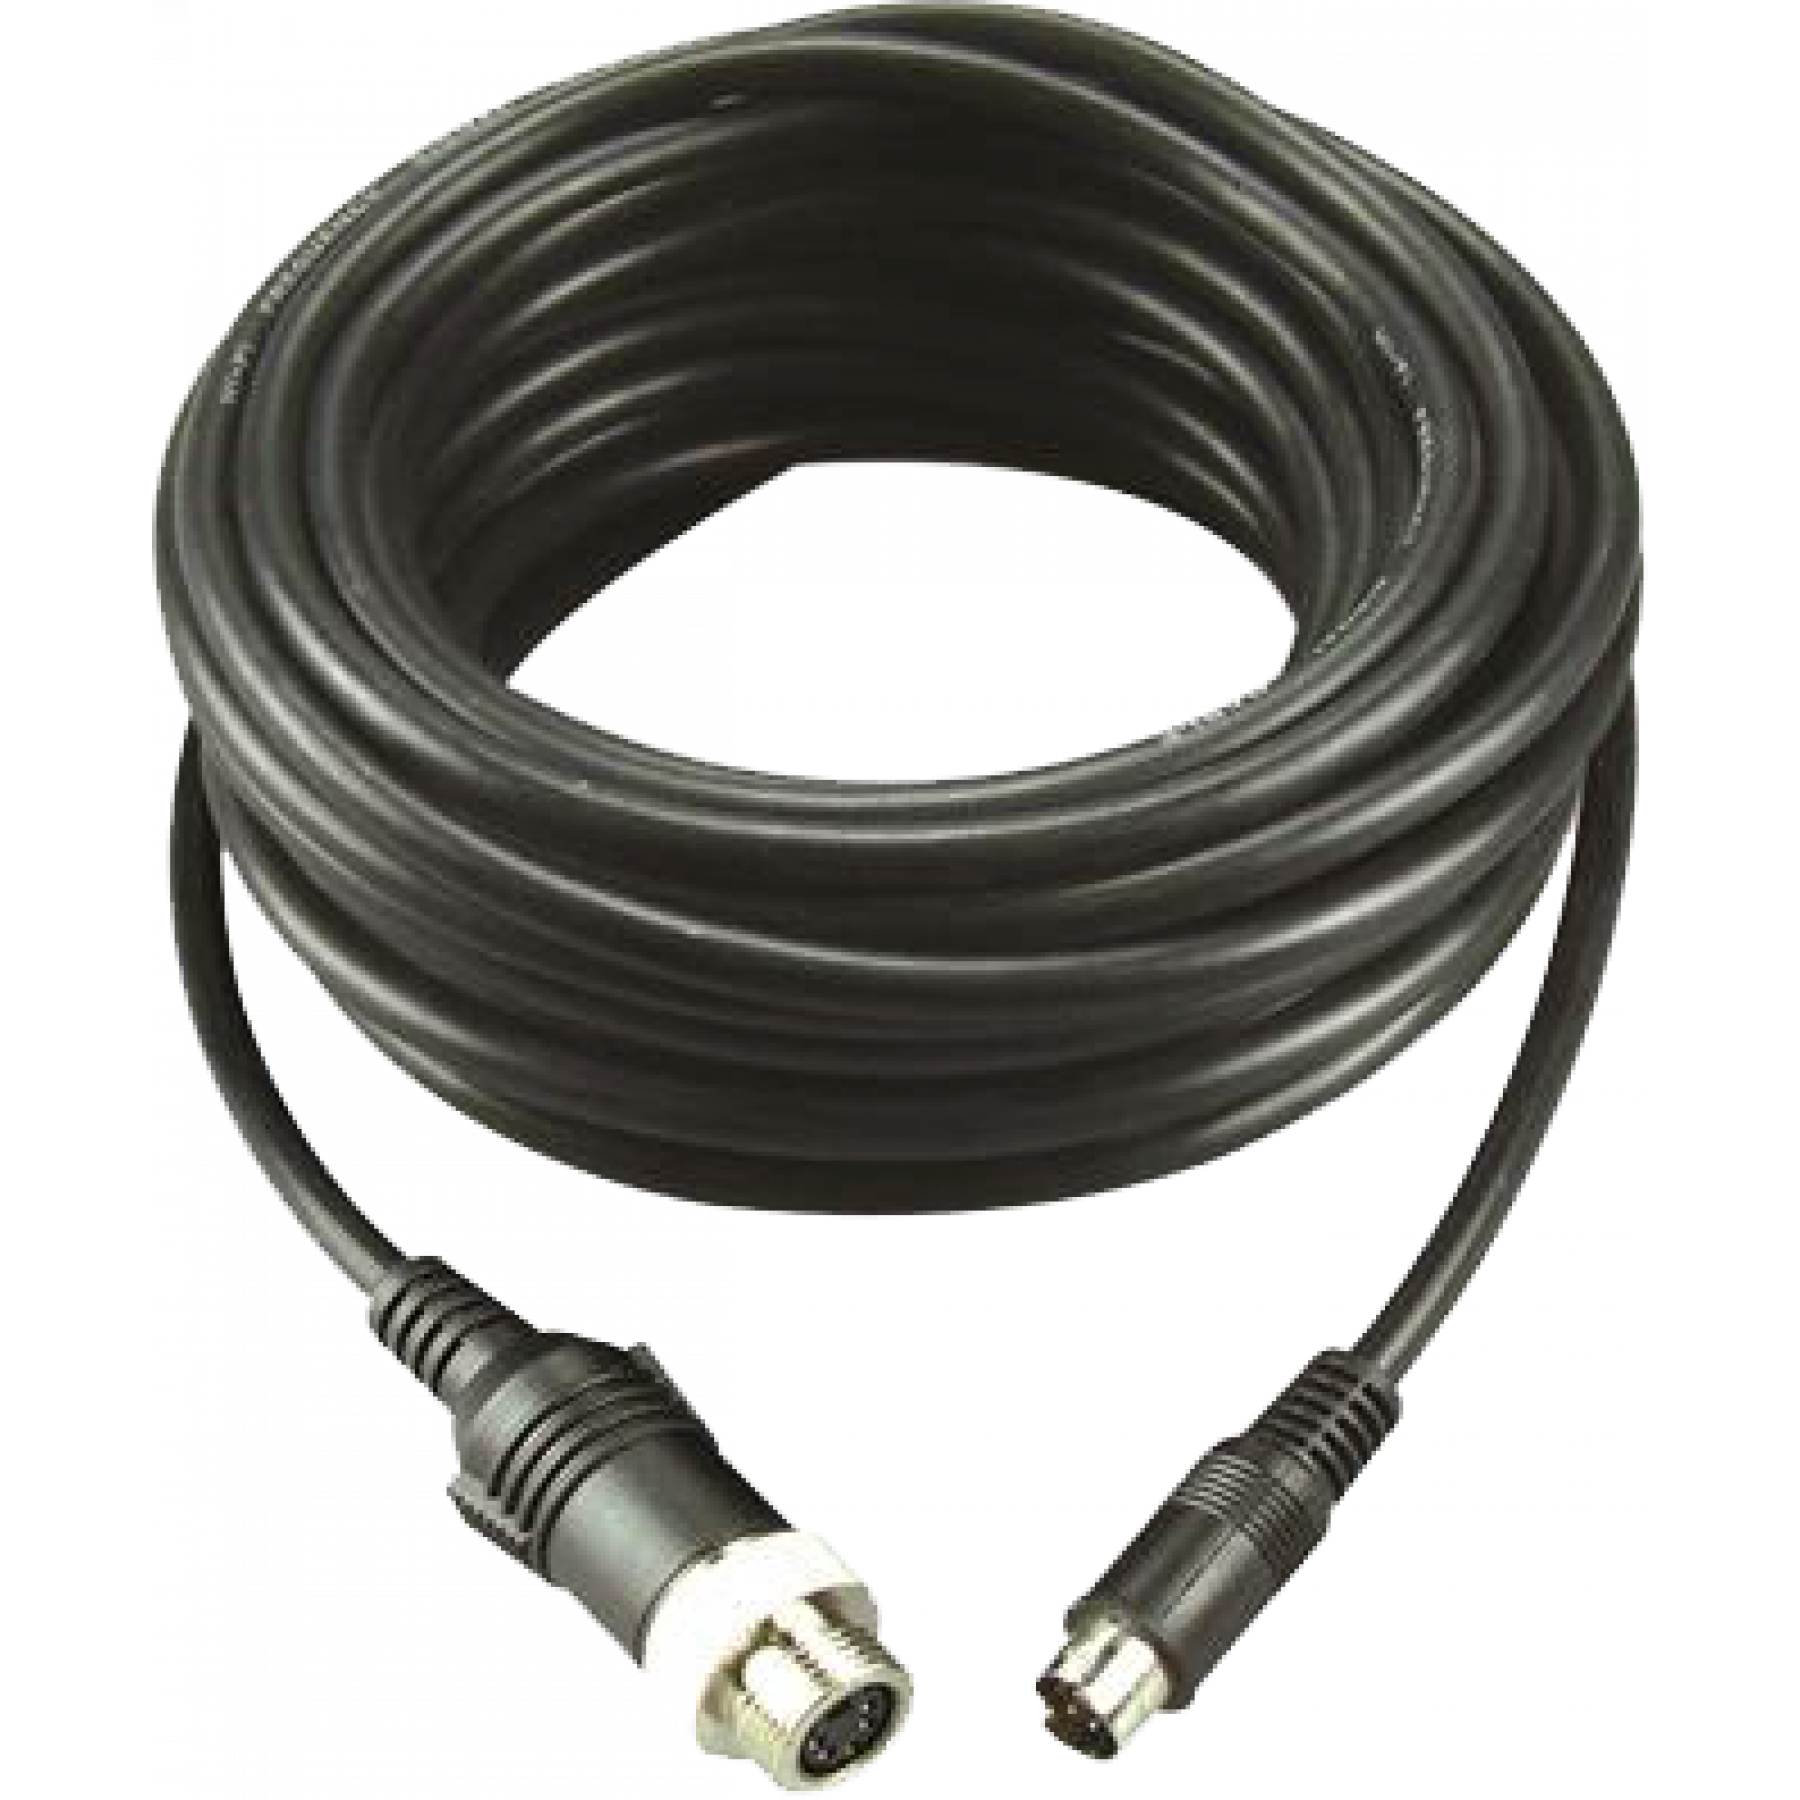 Cable 15m, mini DIN male -> waterproof female standard